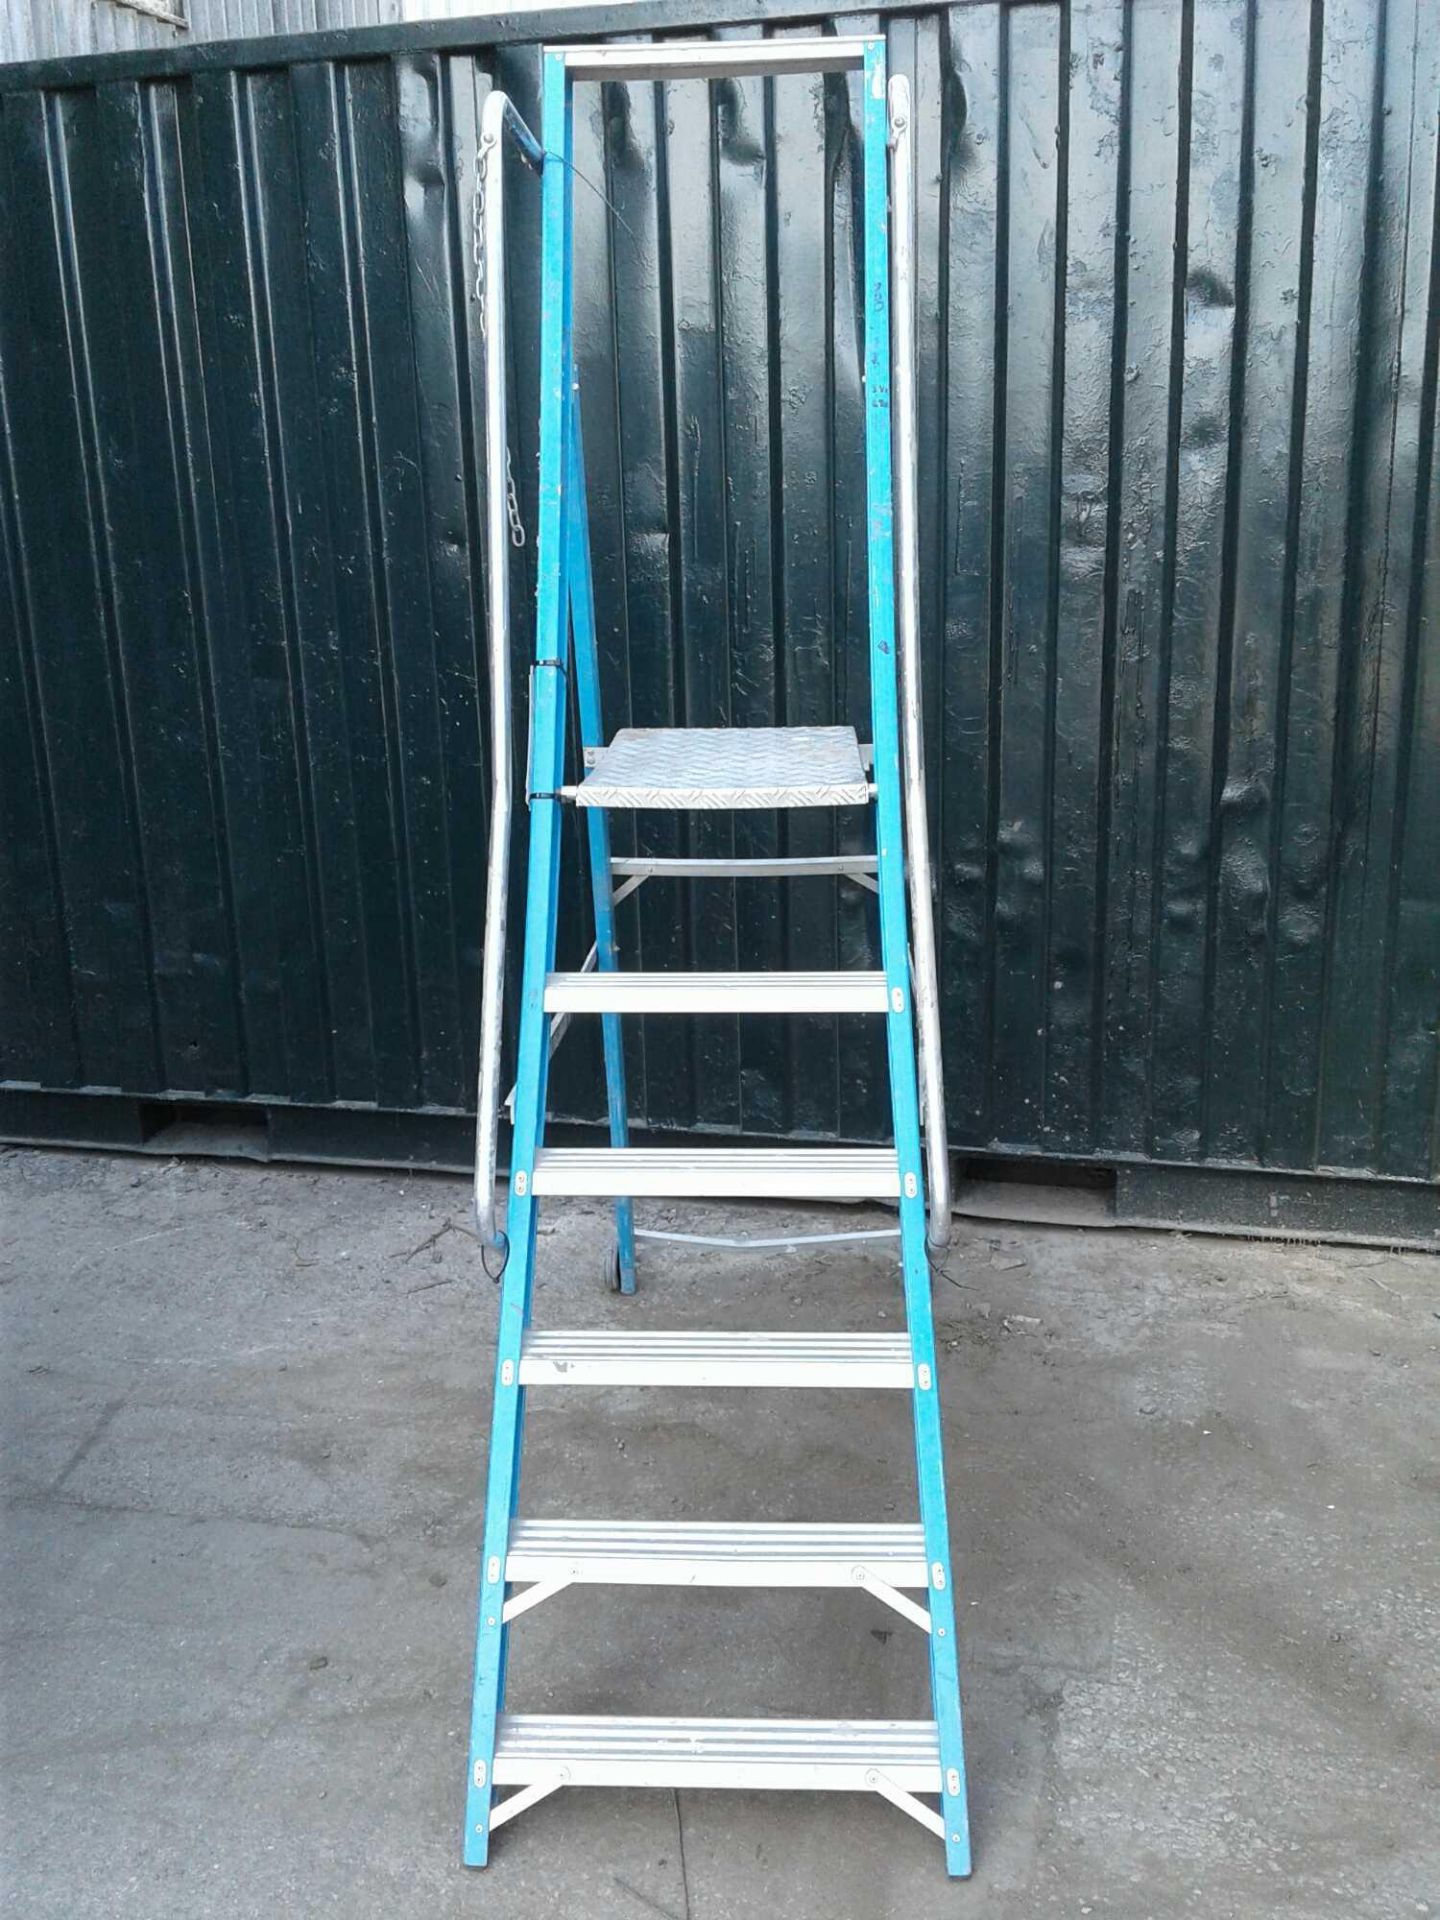 6 step platform step ladders - Image 2 of 2